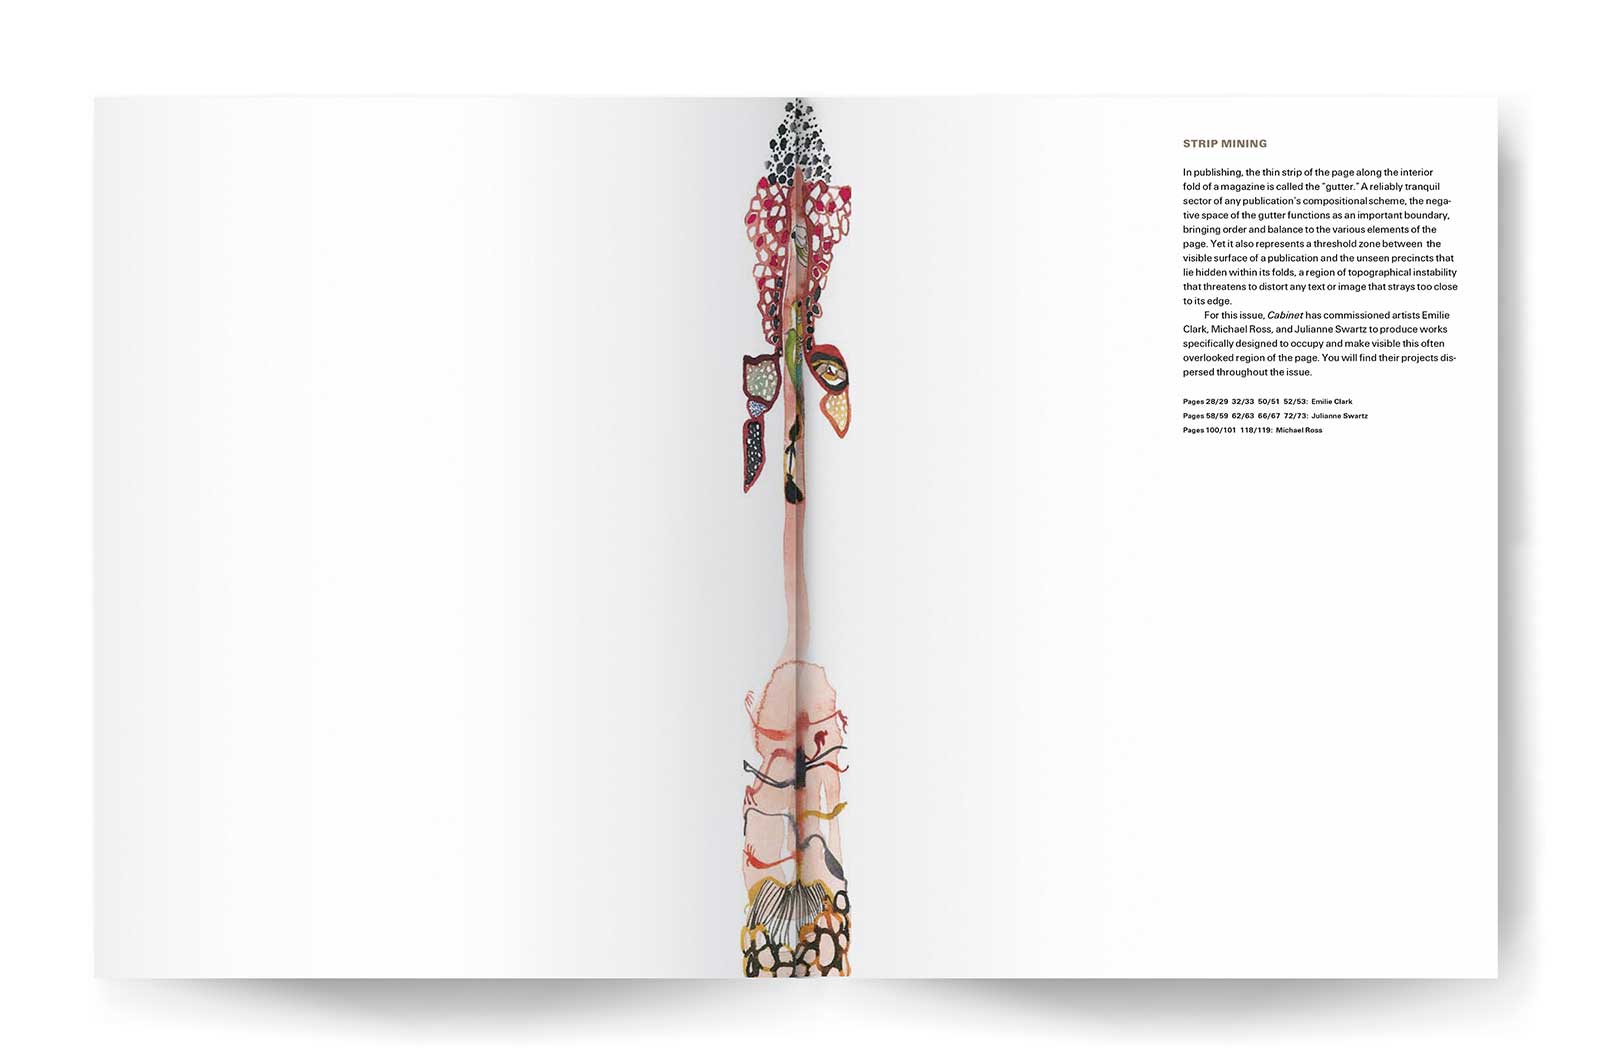 Abstract floral gutter design by artist Emilie Clark.